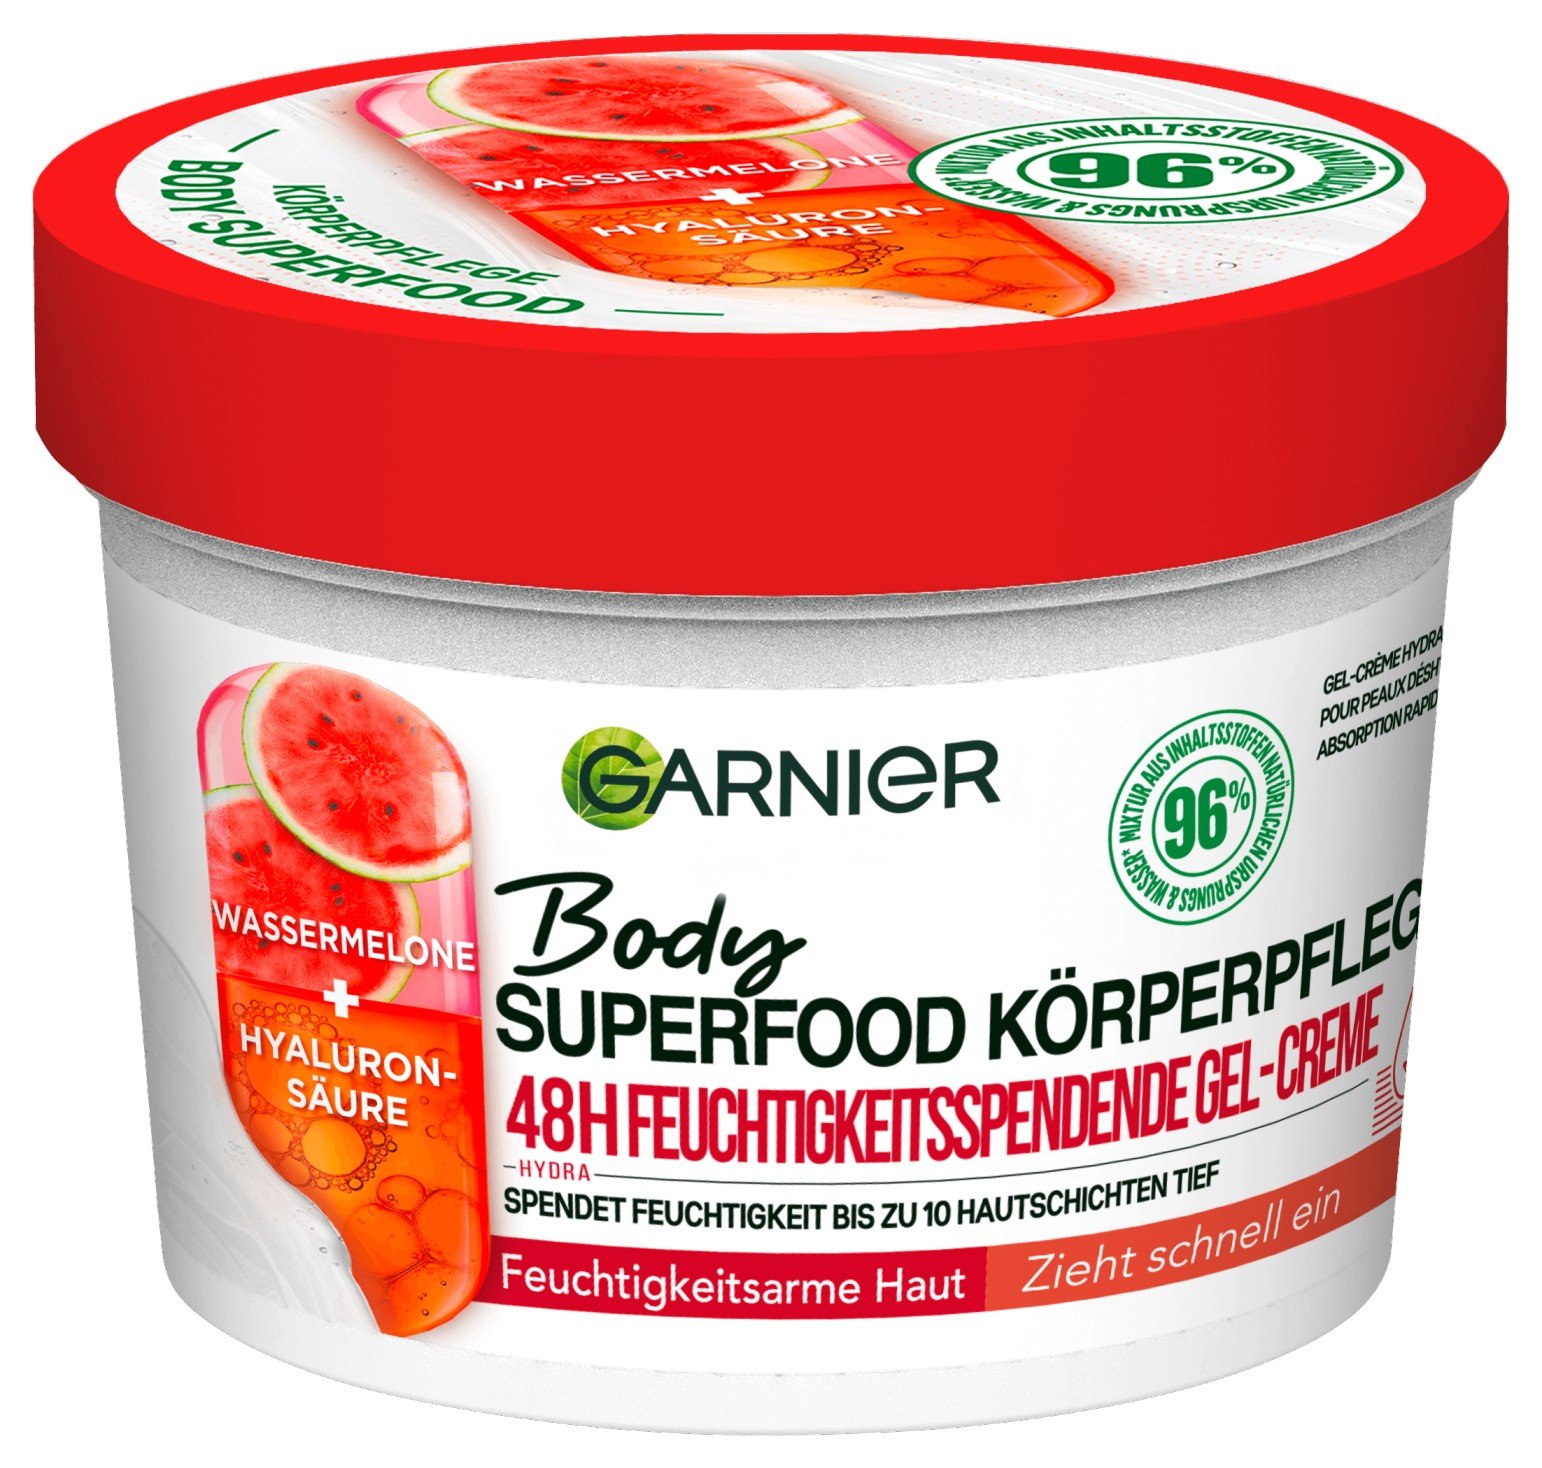 3600542470261-Garnier-Body Superfood Wassermelone Hyaluronsaeure 380ml Dose-Koerpercreme_main